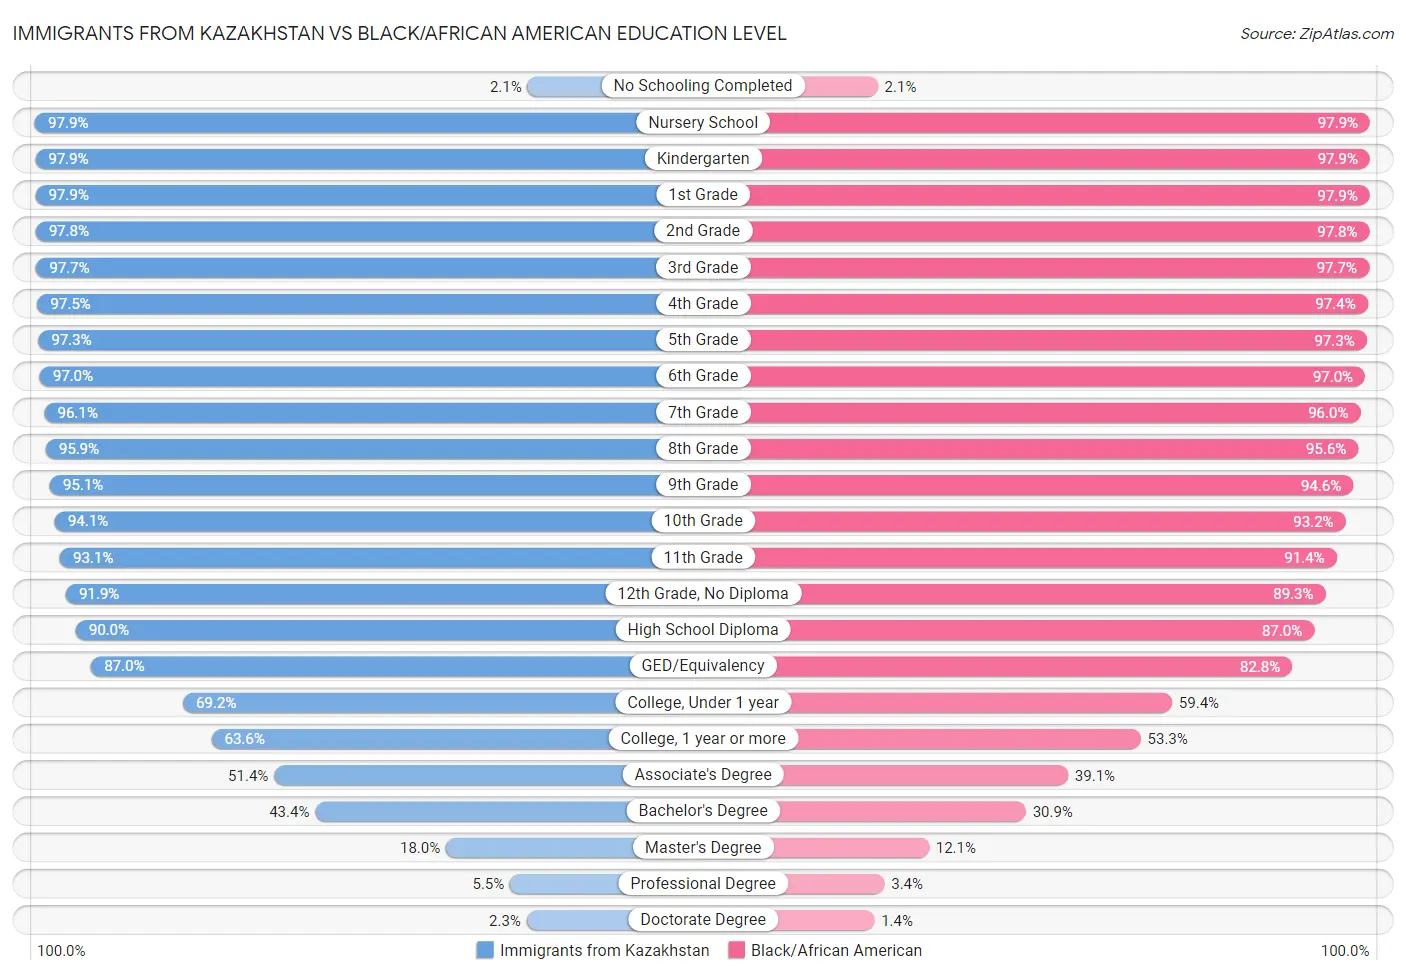 Immigrants from Kazakhstan vs Black/African American Education Level